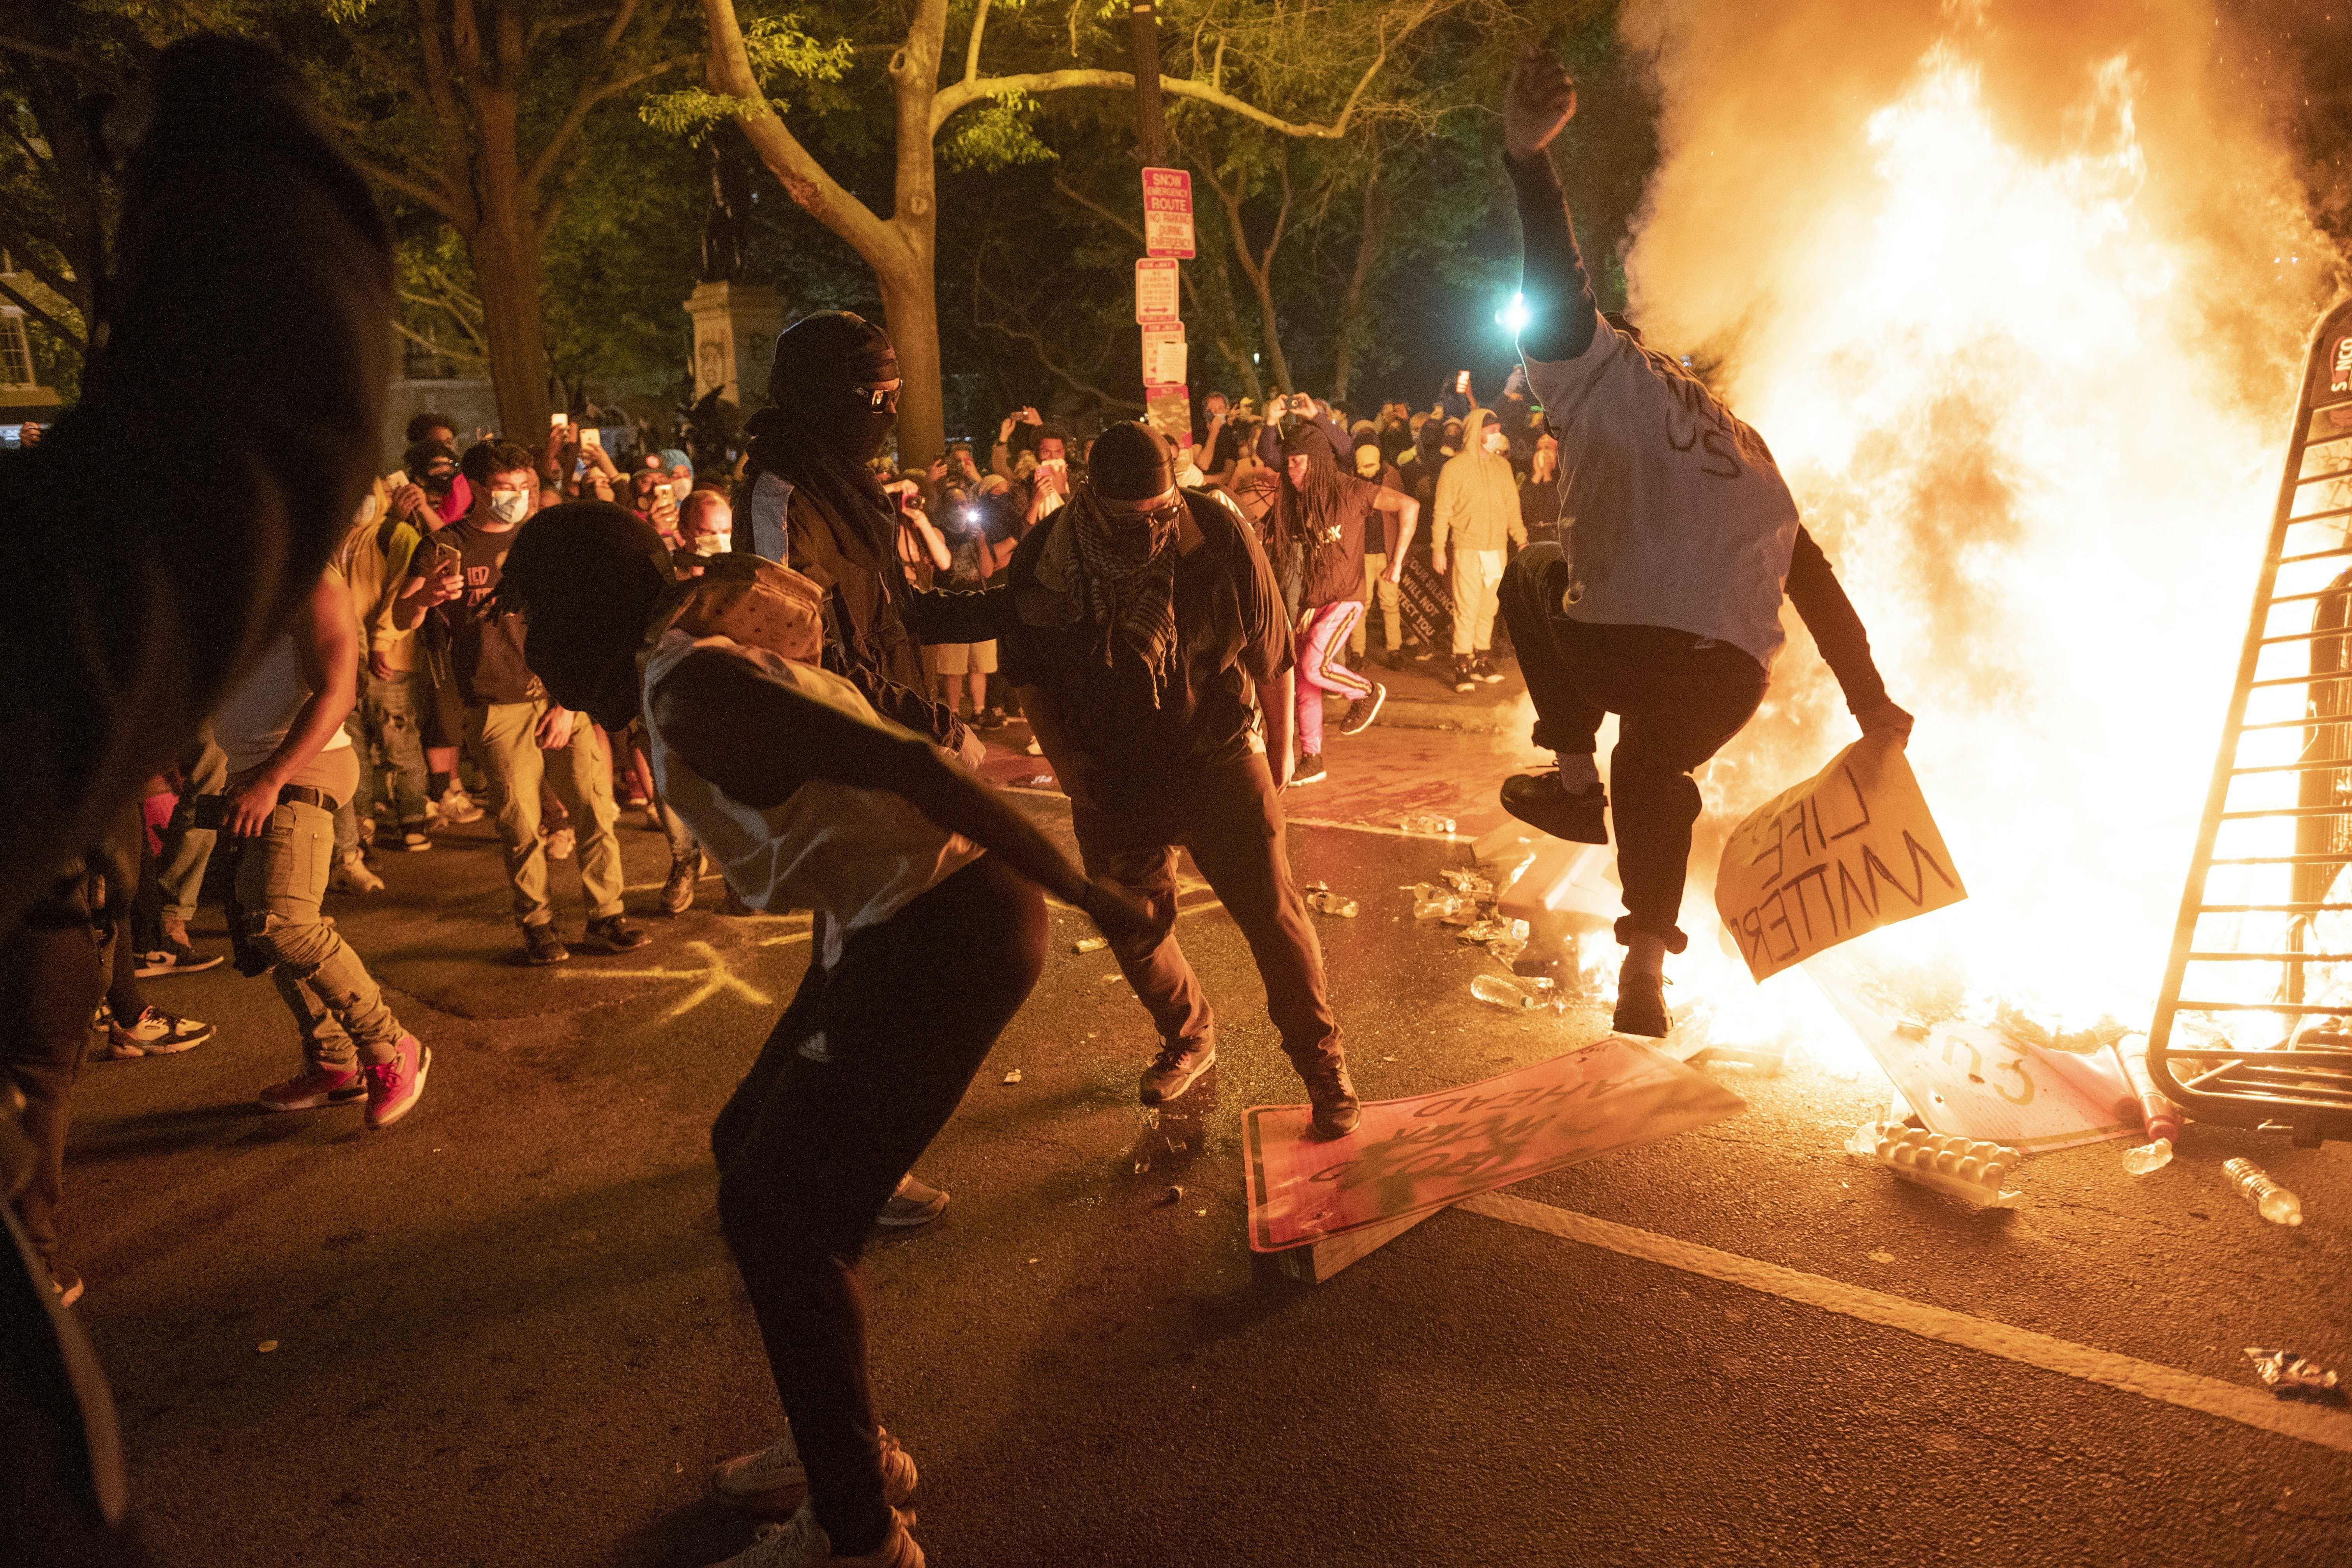 Protesters jump on a street sign near a burning barricade.